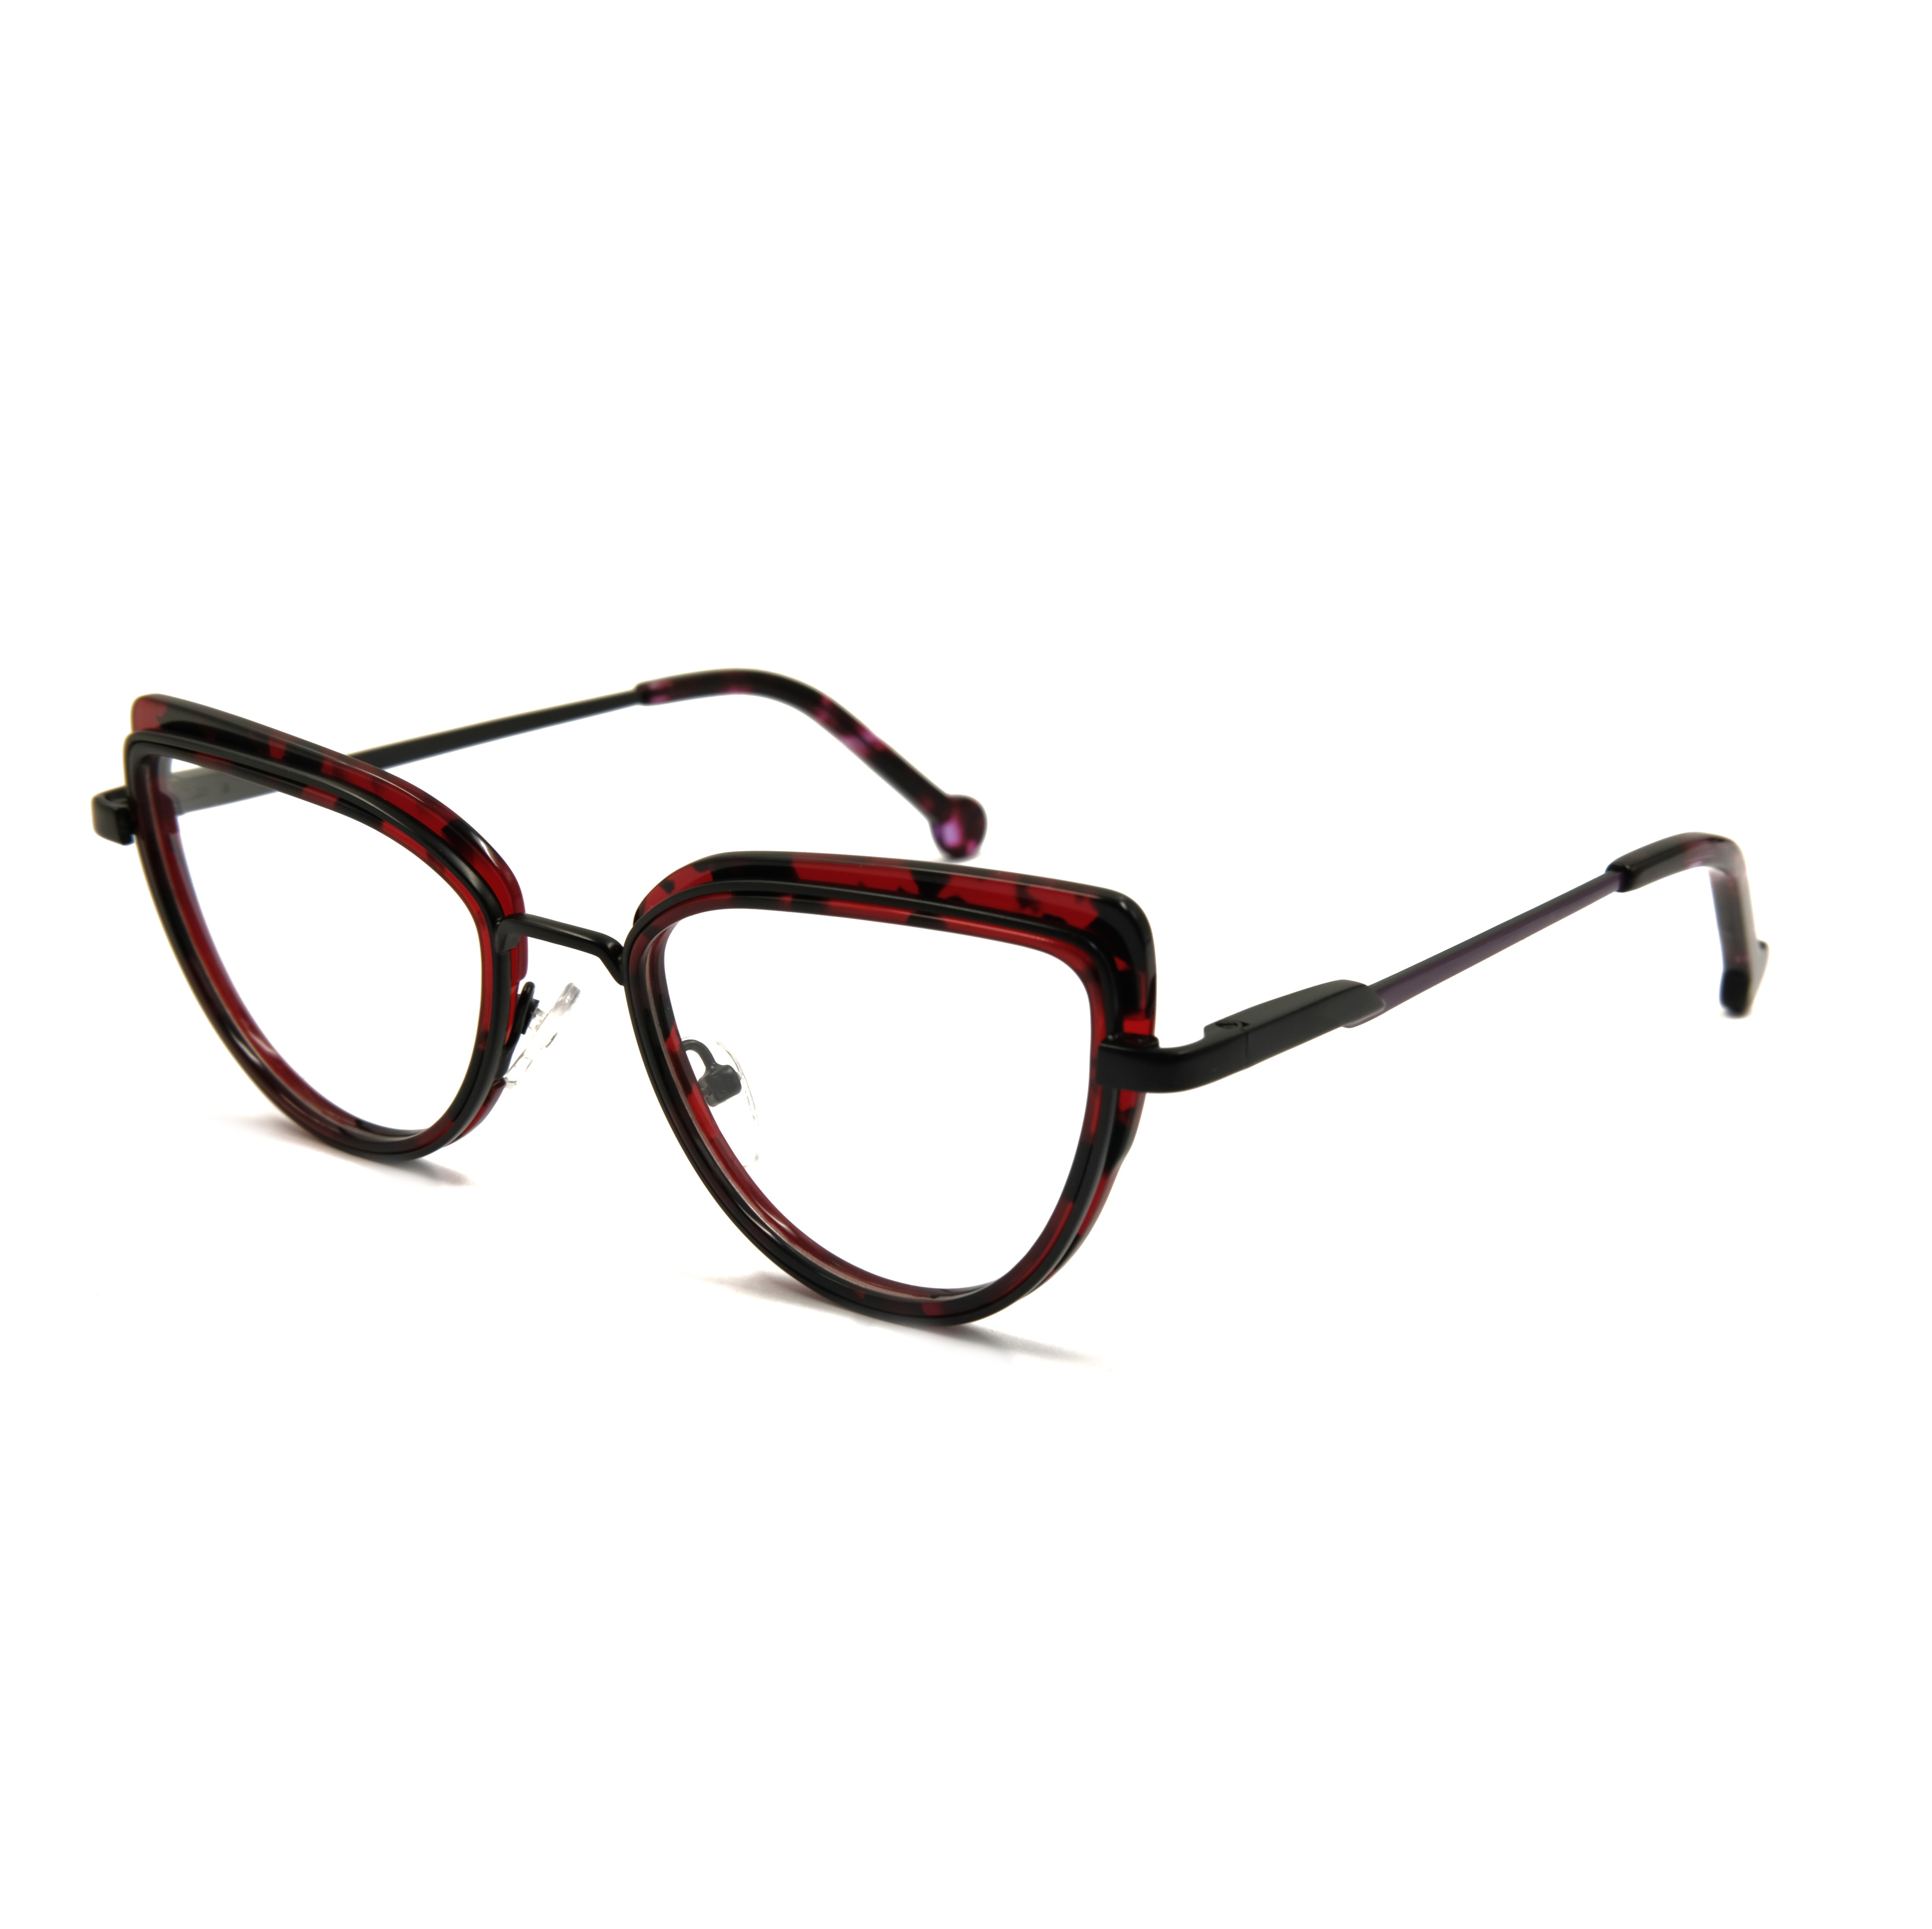 Black Red Tortoise Acetate Cat Eye Metal Acetate Optical Frame Eyeglasses